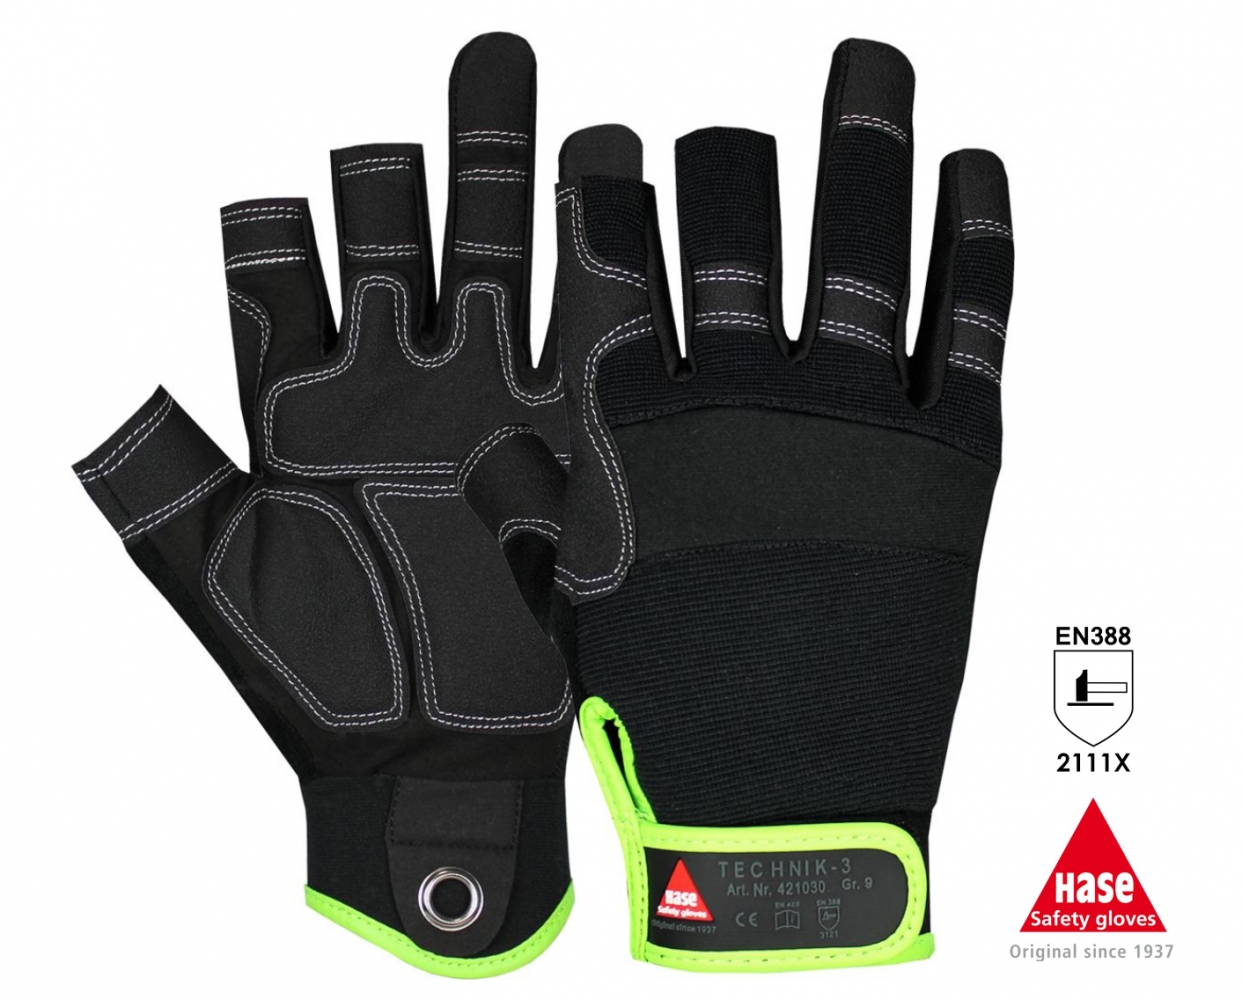 pics/hase-safety-gloves/hase-421030-technik-3-finger-mechaniker-schutzhandschuhe.jpg